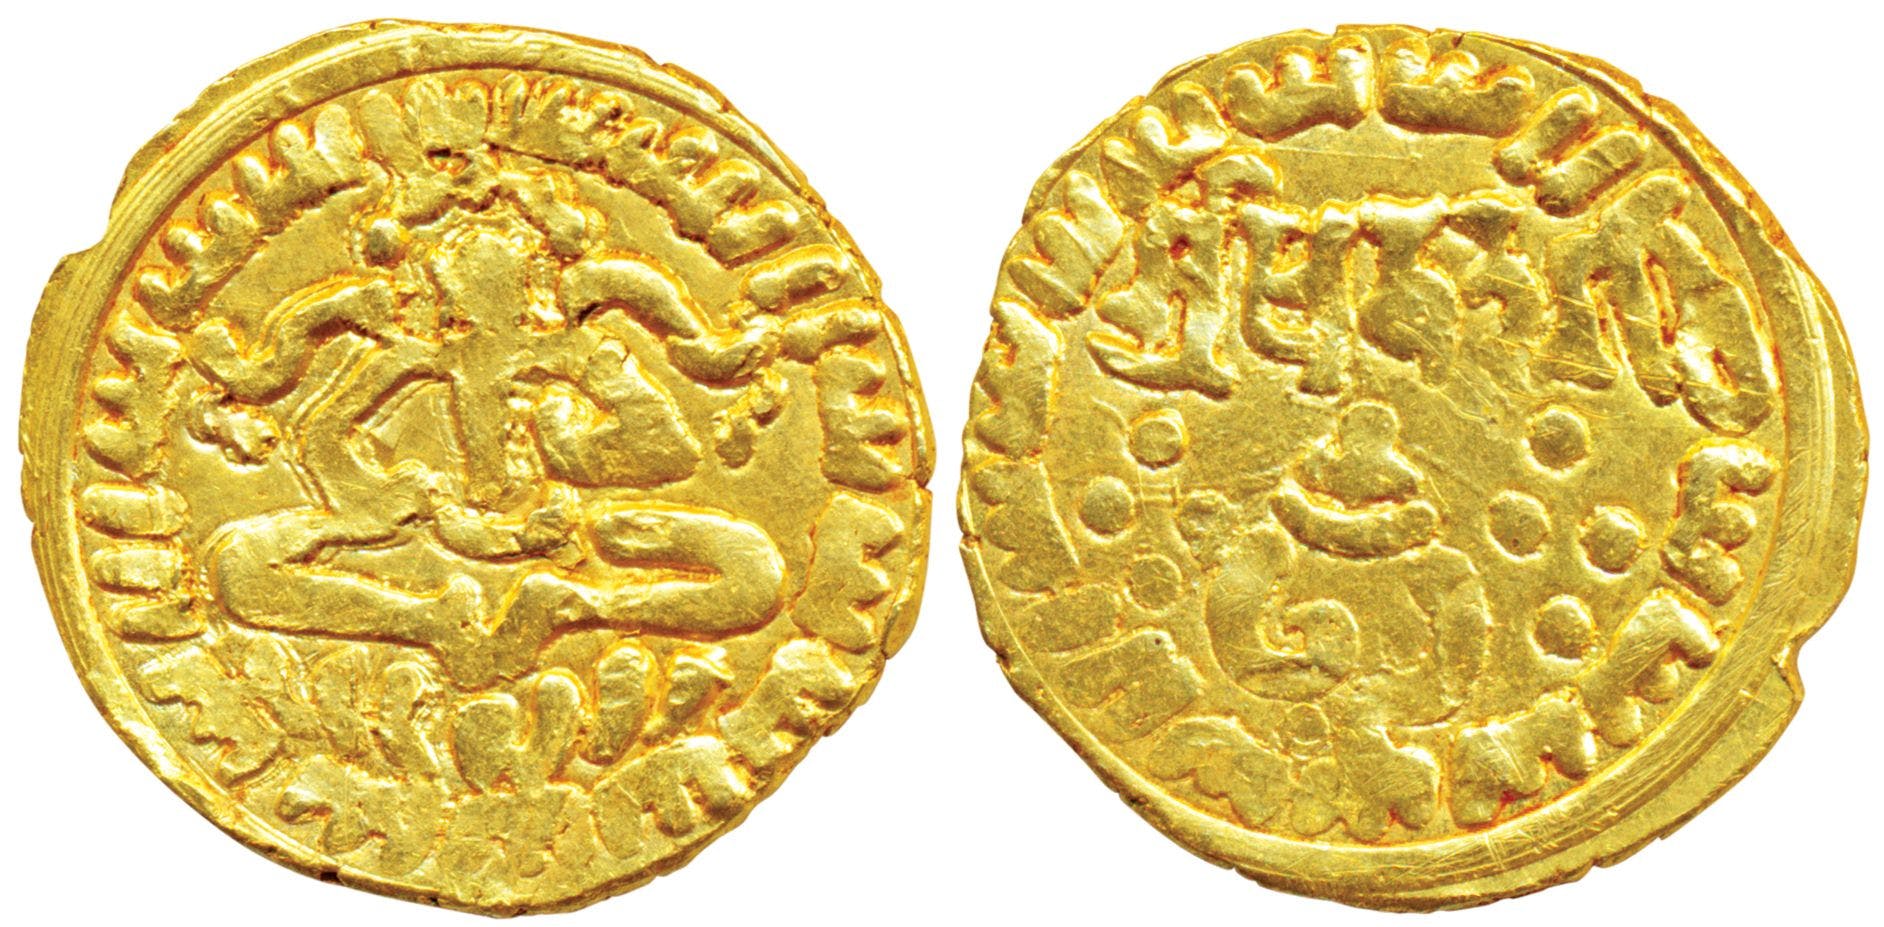 Gold coin of Krishna II (9th Century CE)